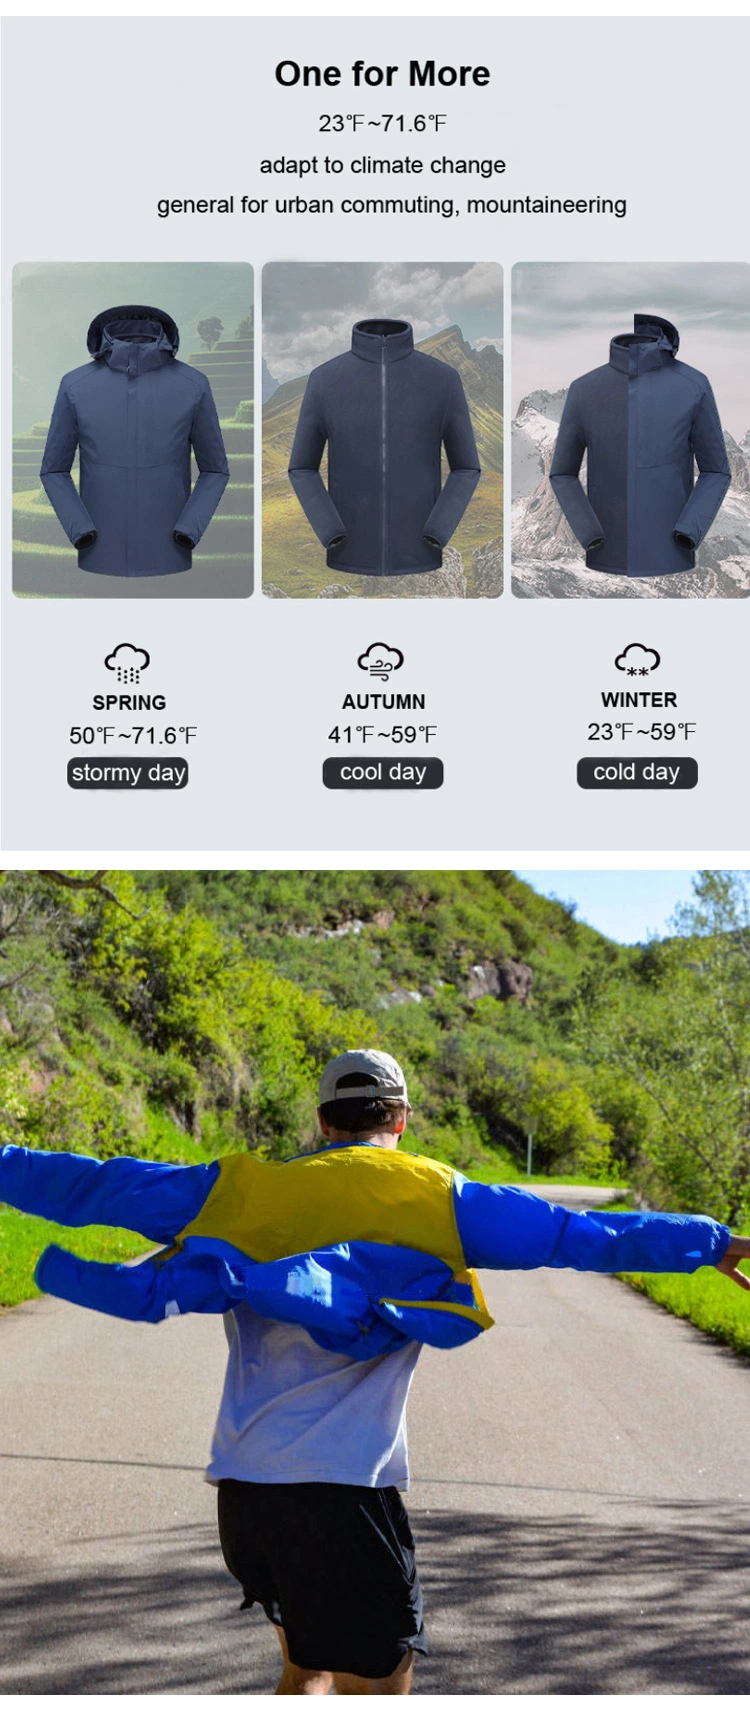 Customized Autumn and Winter Polar Fleece Vest Men&prime;s Fleece Velvet Jacket